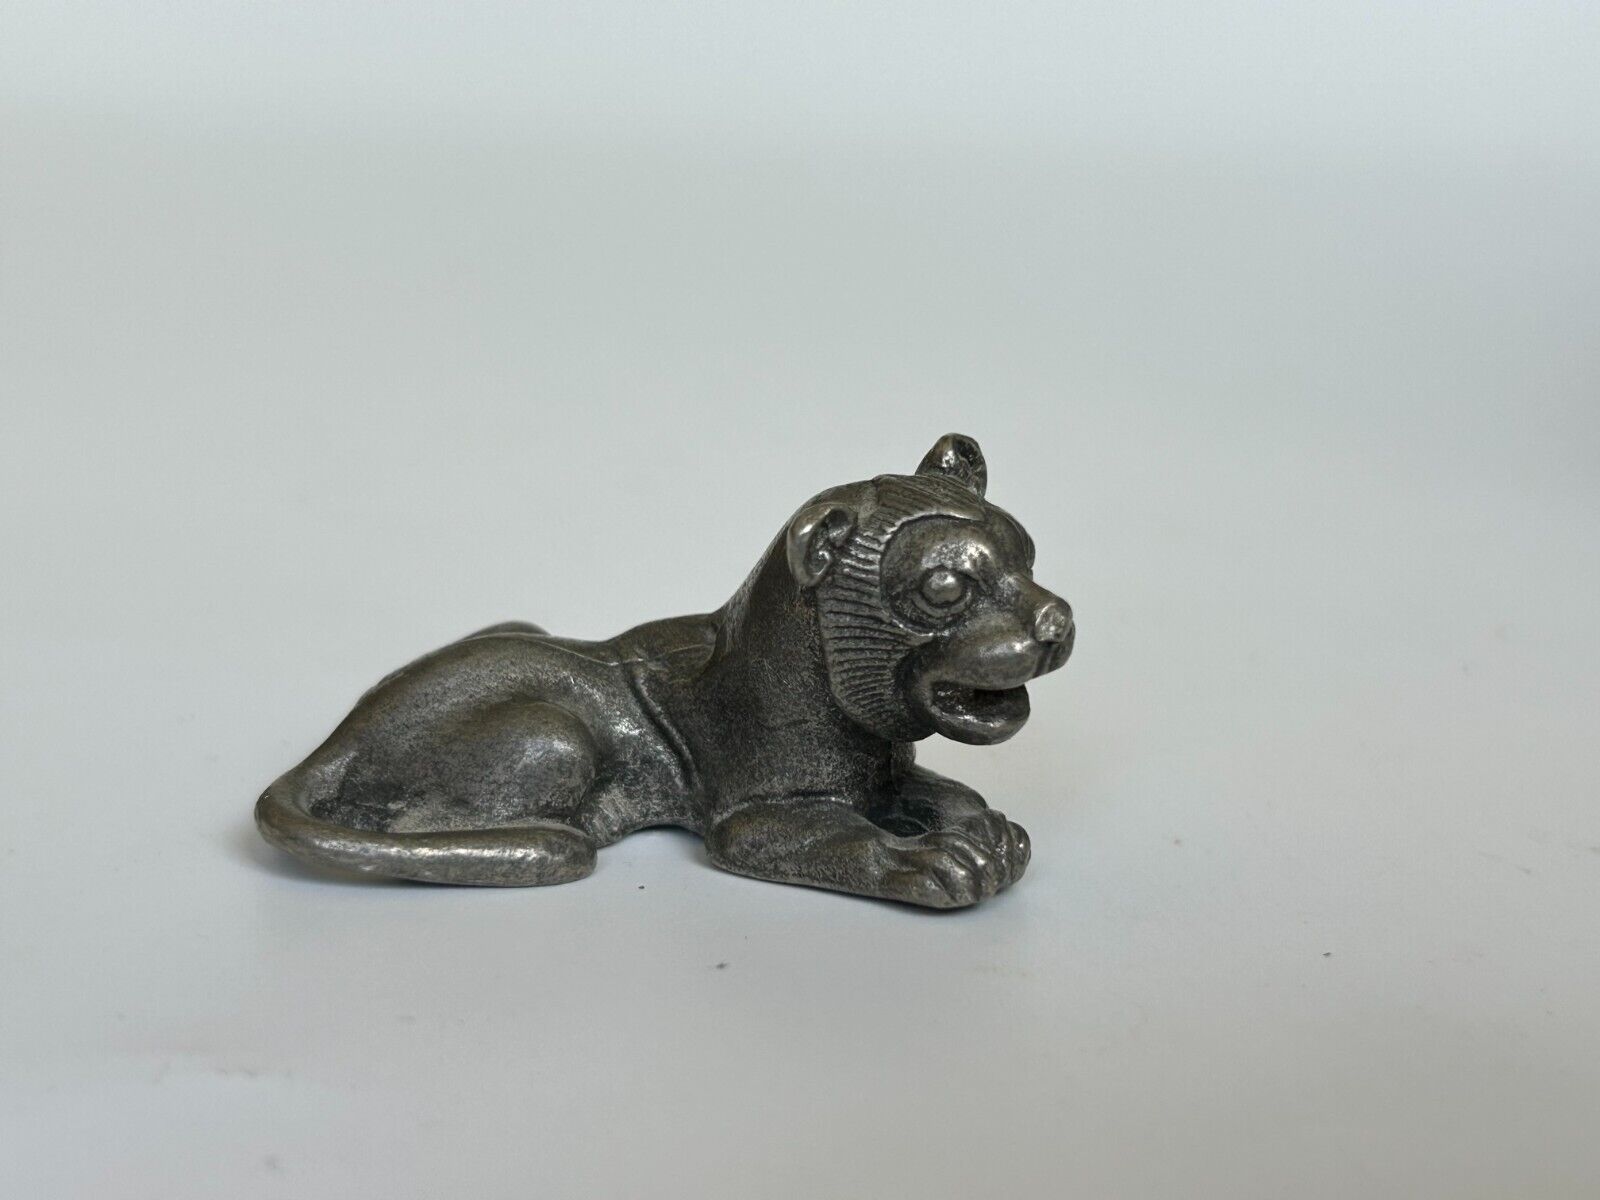  Metropolitan Museum of Art Pewter Lion Figurine Signed MMA 1976